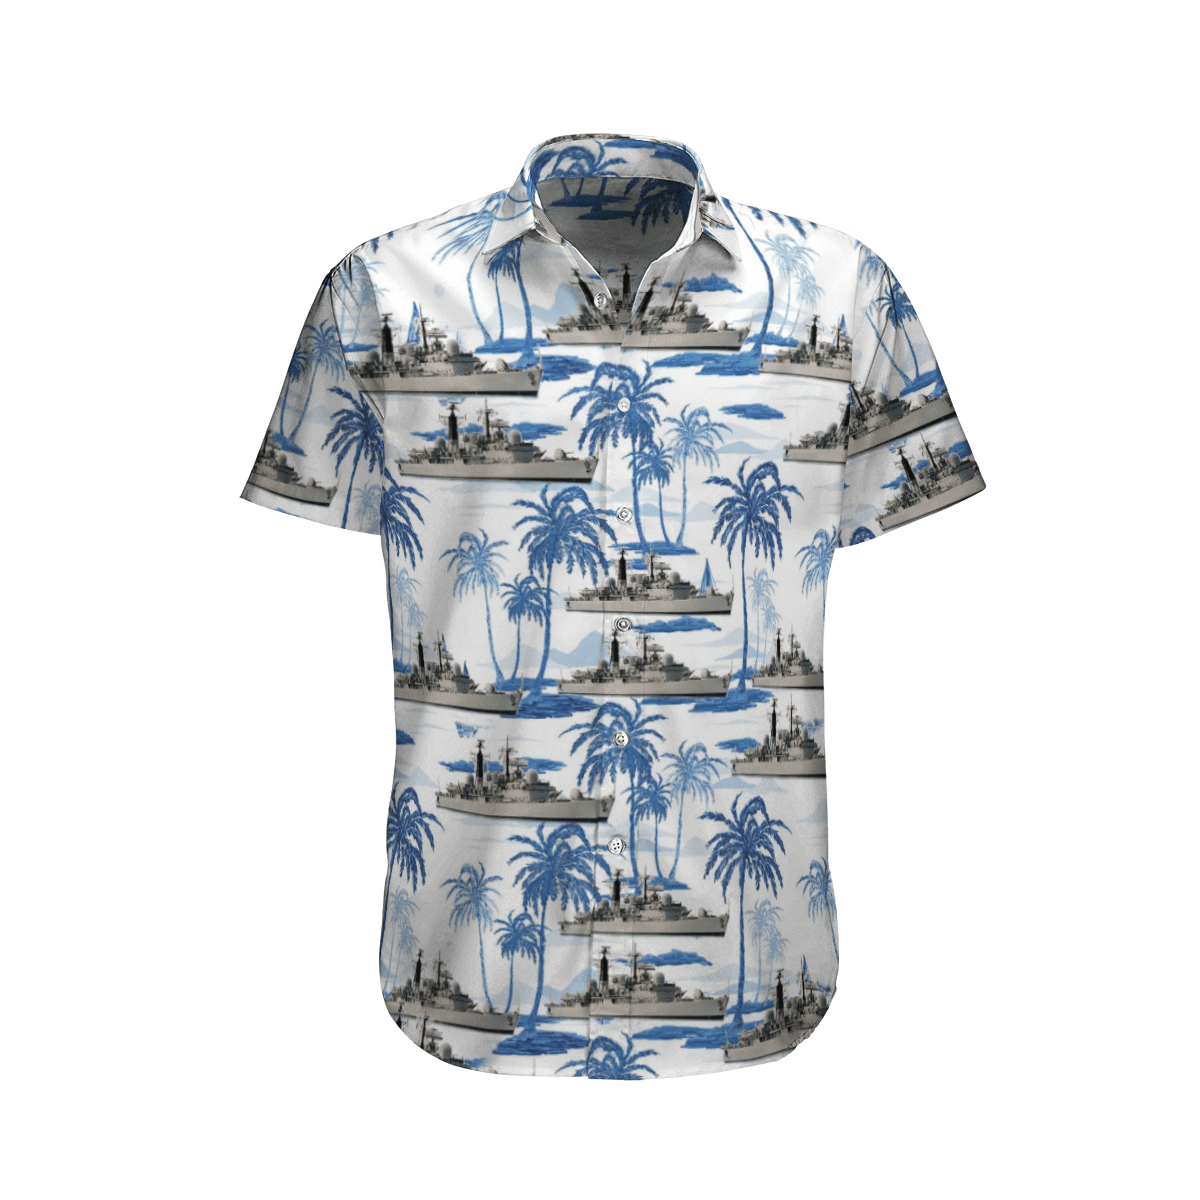 Get a new Hawaiian shirt to enjoy summer vacation 184